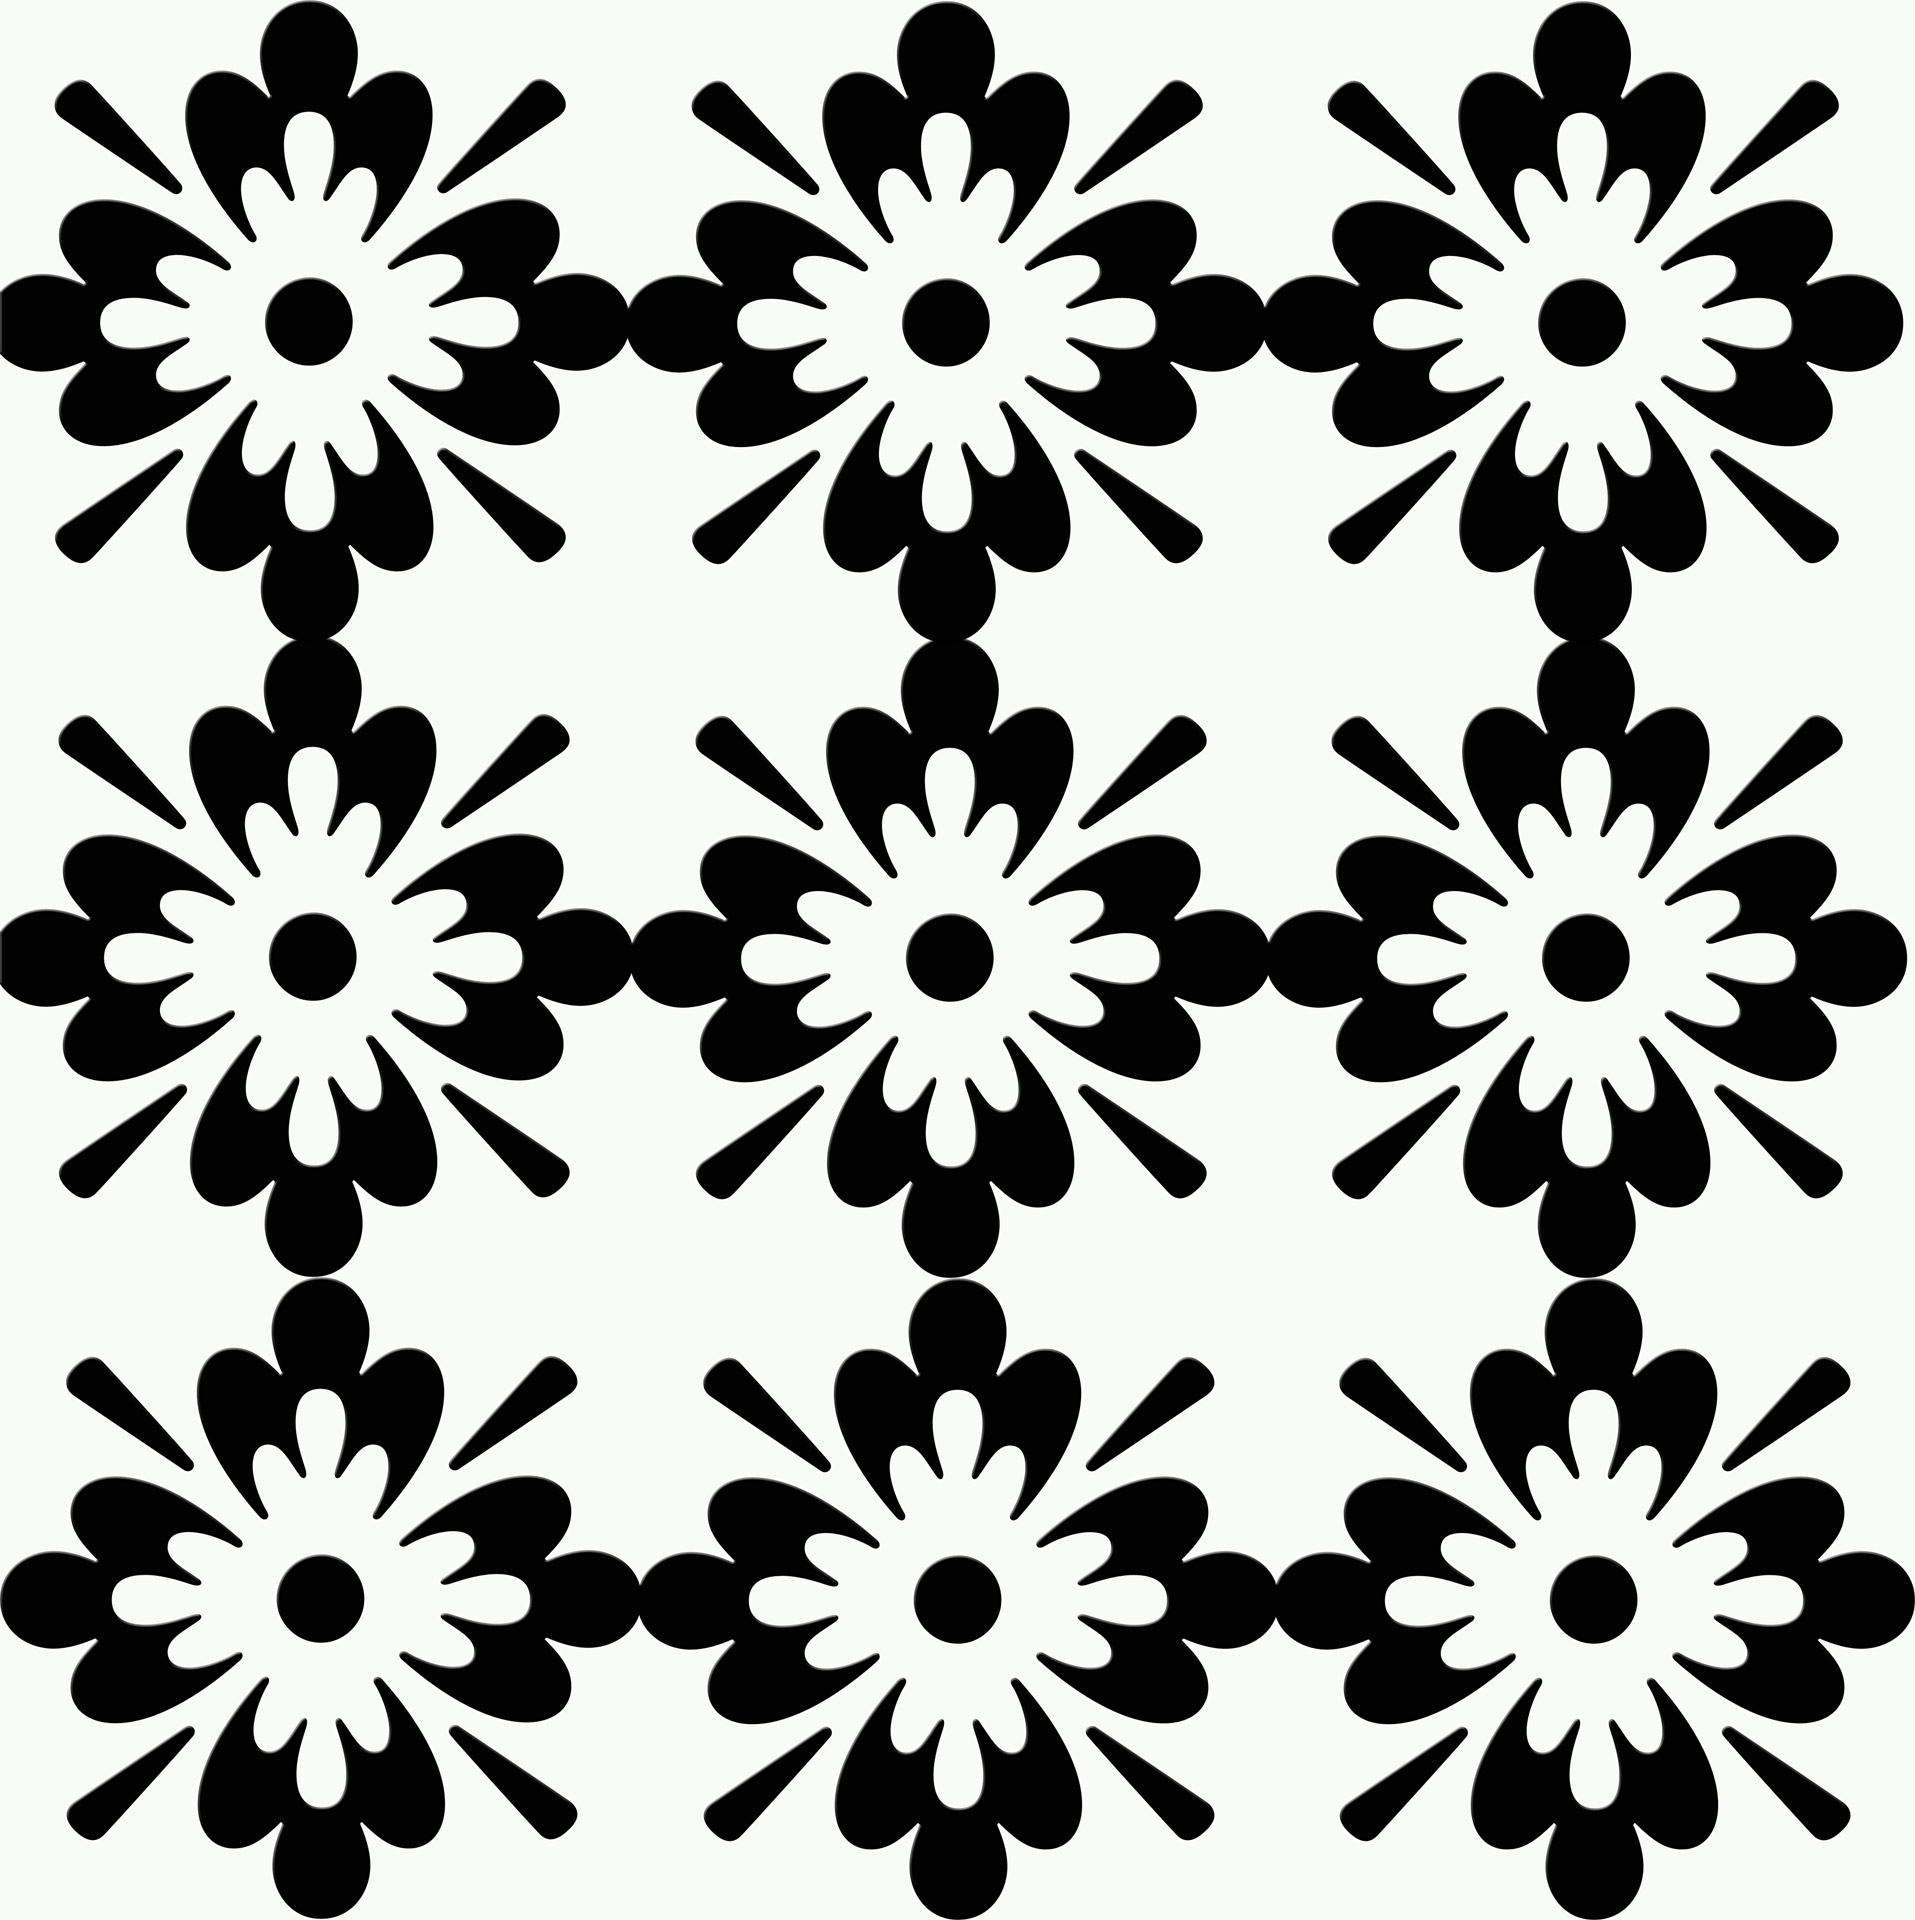 floral-illustration-black-and-white-free-stock-photo-public-domain